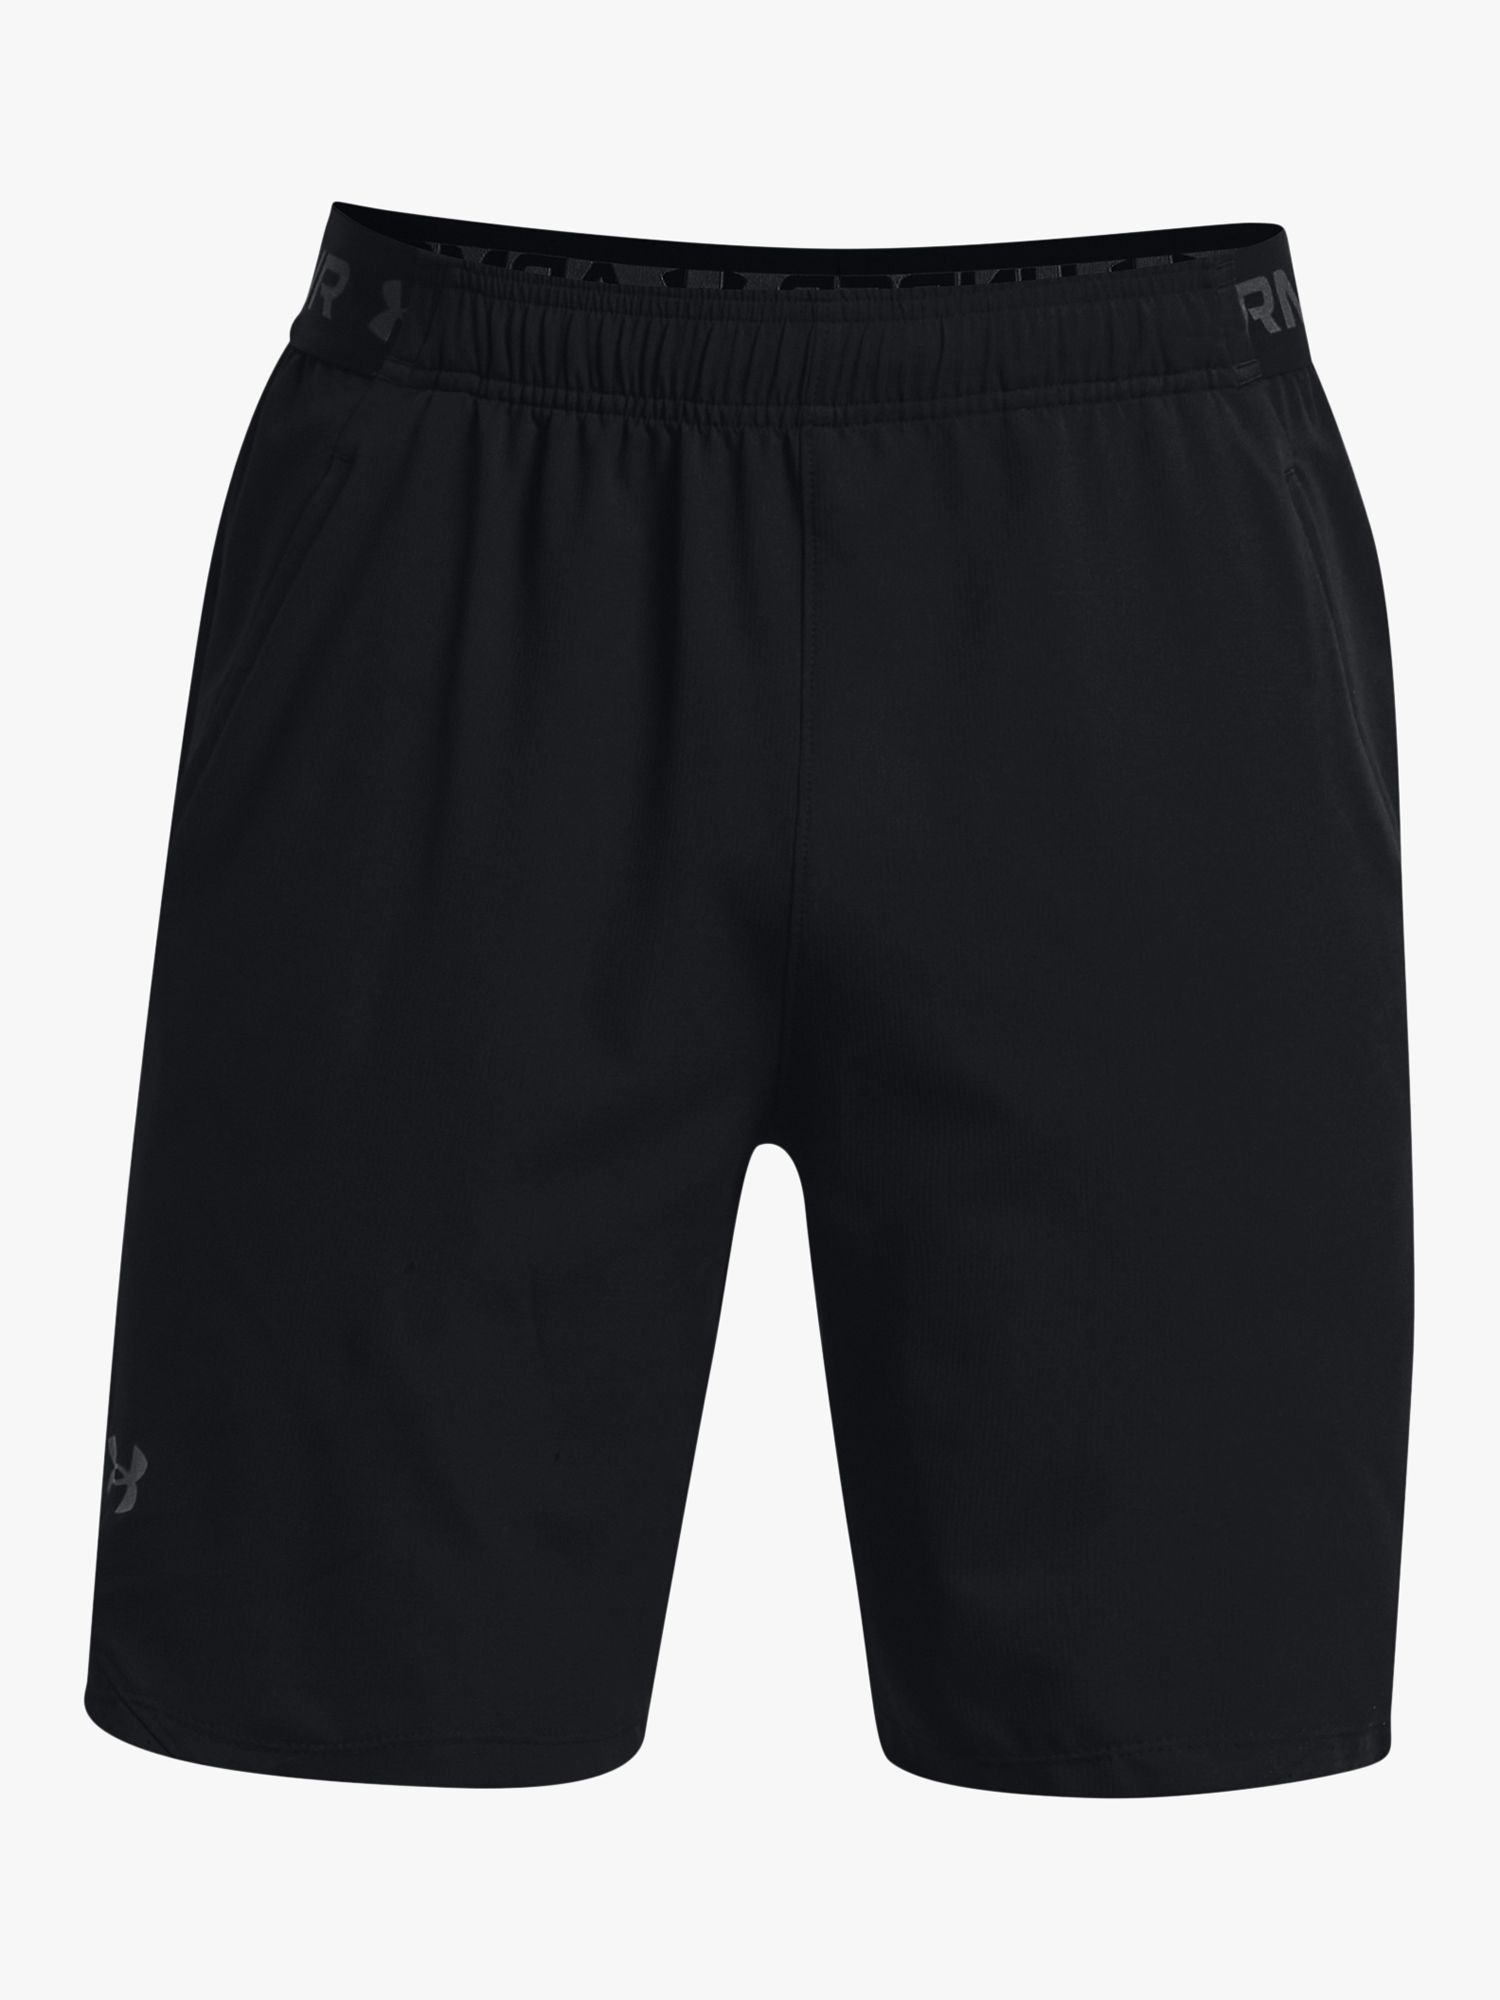 Buy Under Armour Cage Shorts Men Black, Dark Grey online